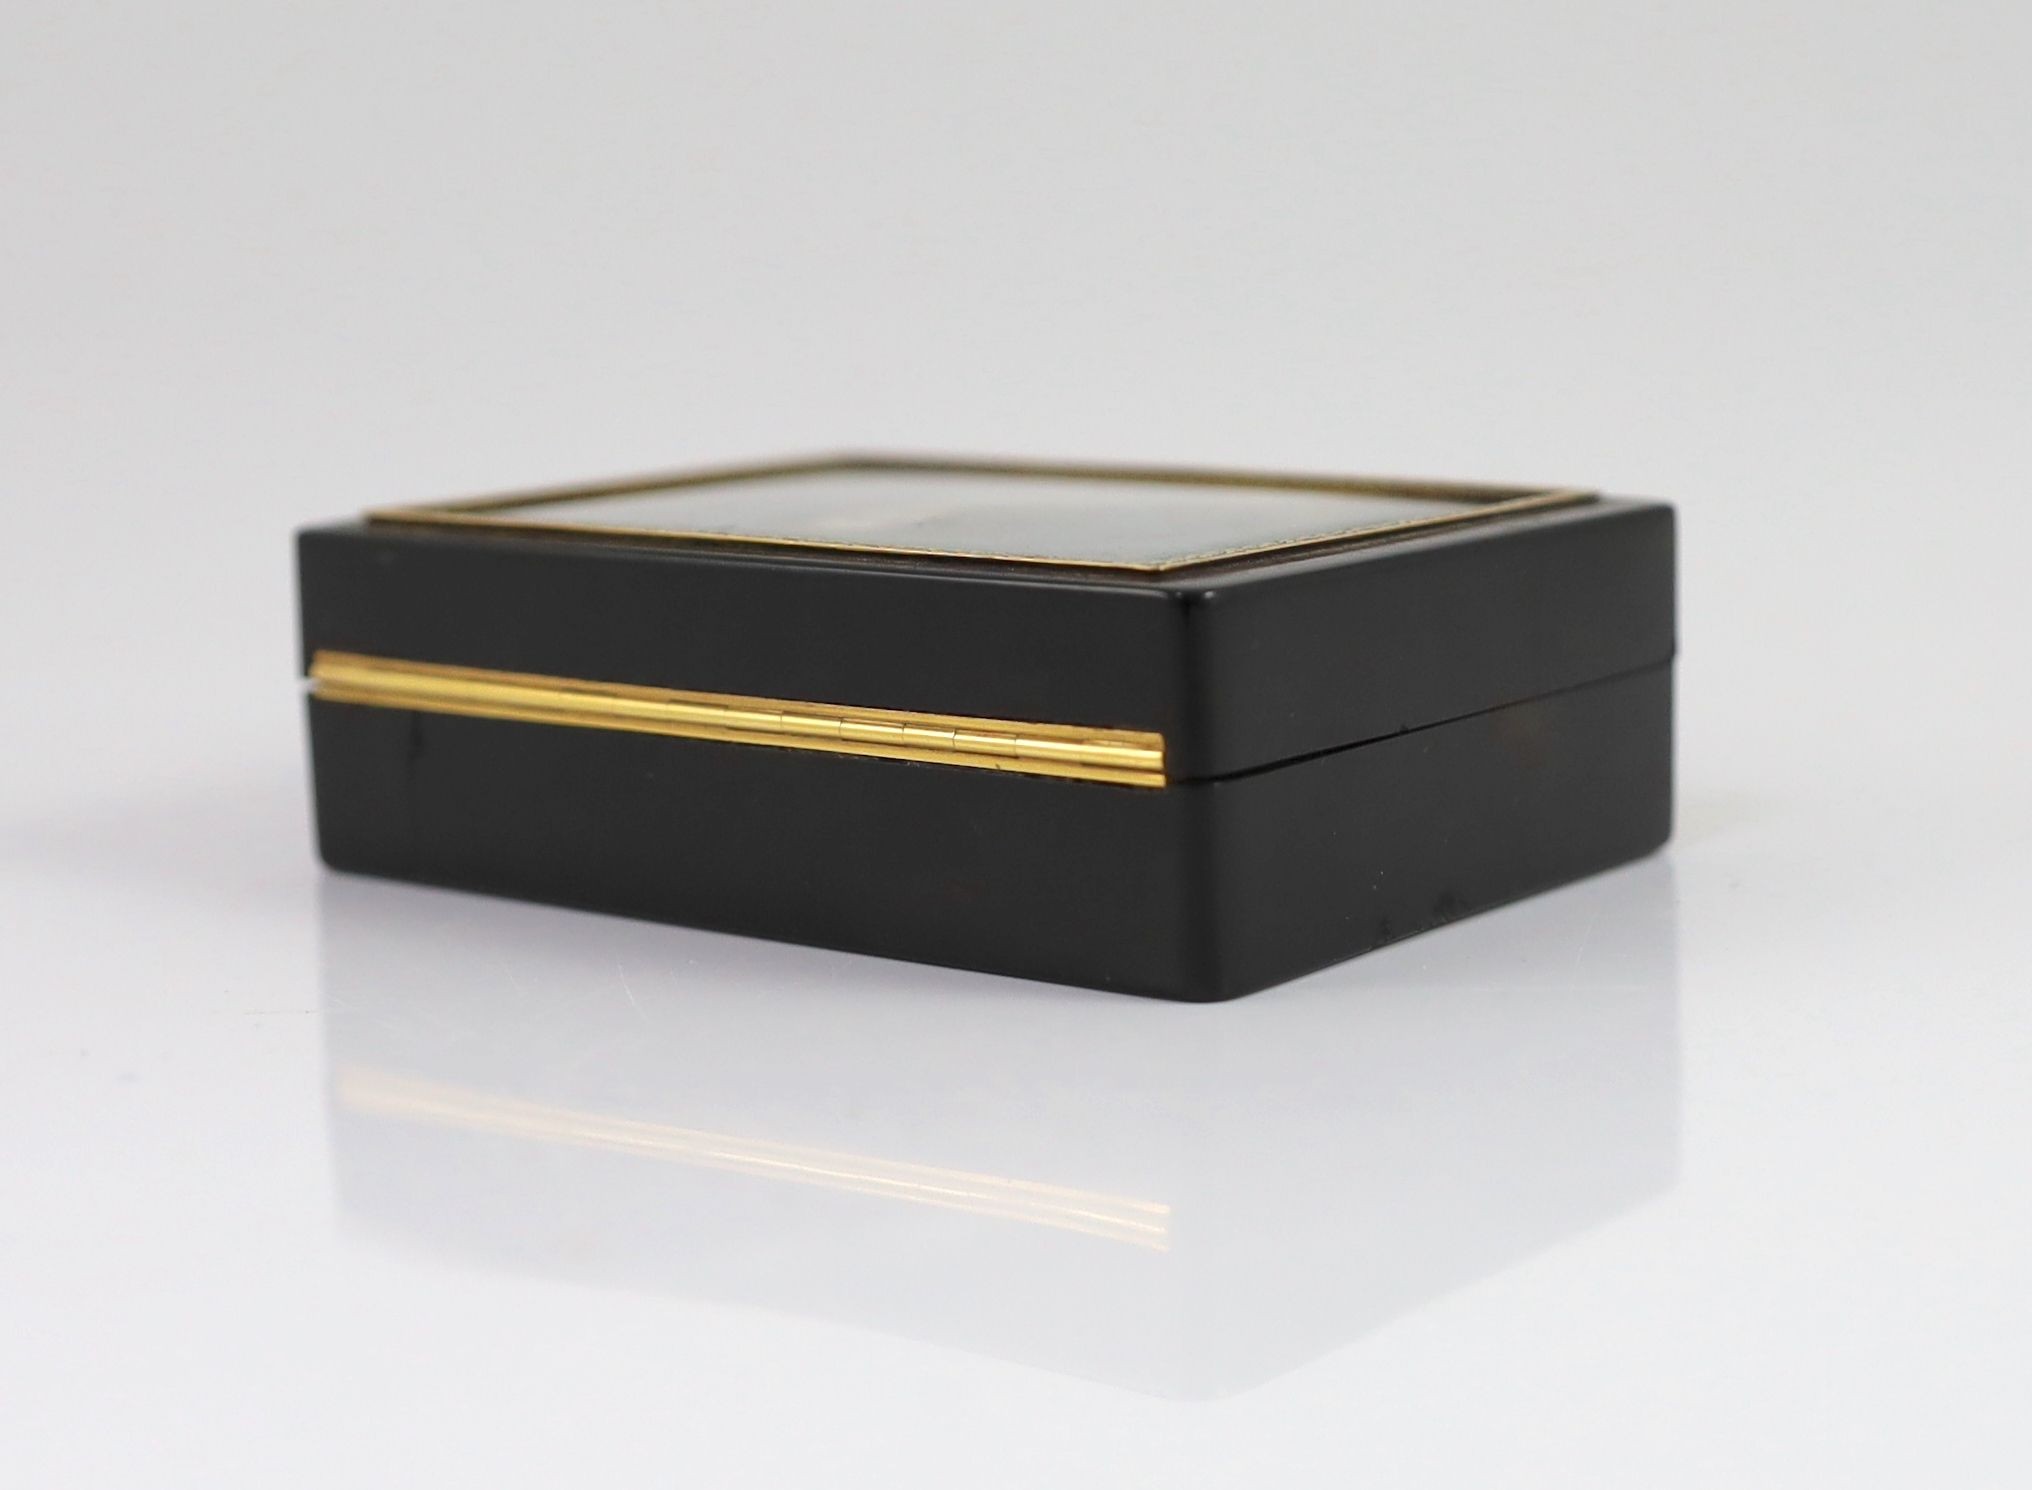 A 19th century Swiss gold mounted tortoiseshell snuff box, 9 x 6cm depth 2.5cm